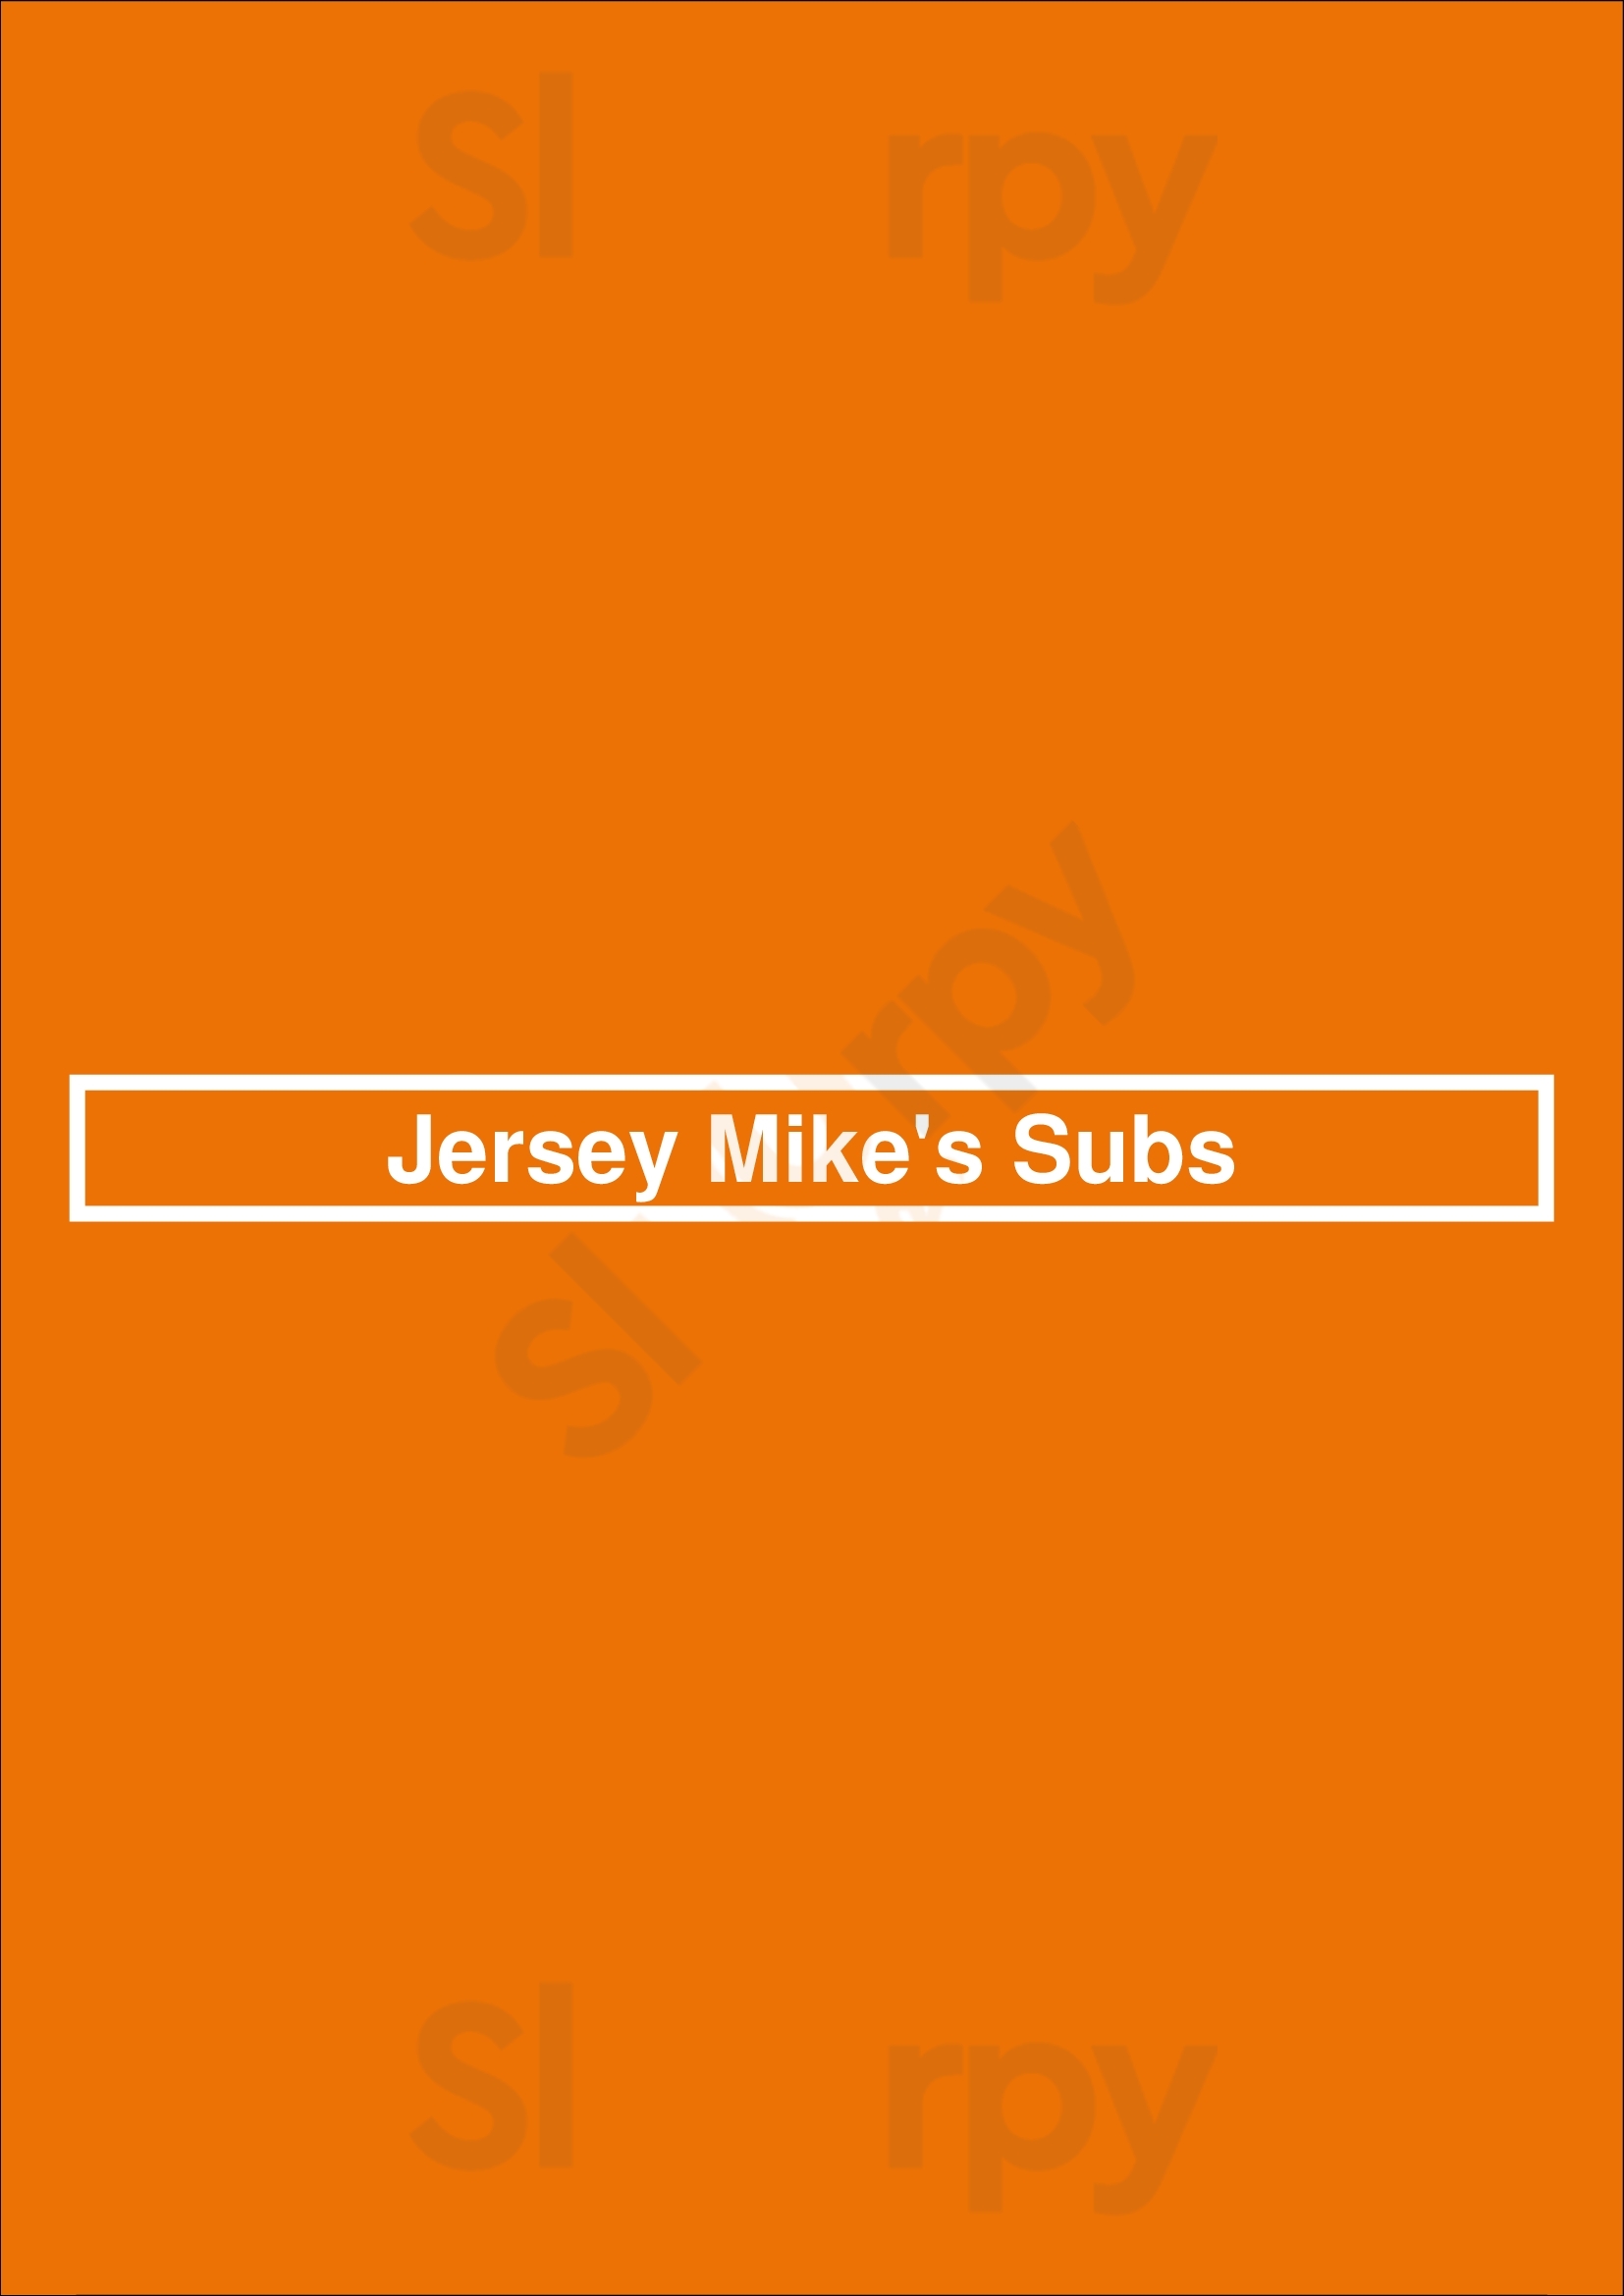 Jersey Mike's Subs Atlanta Menu - 1